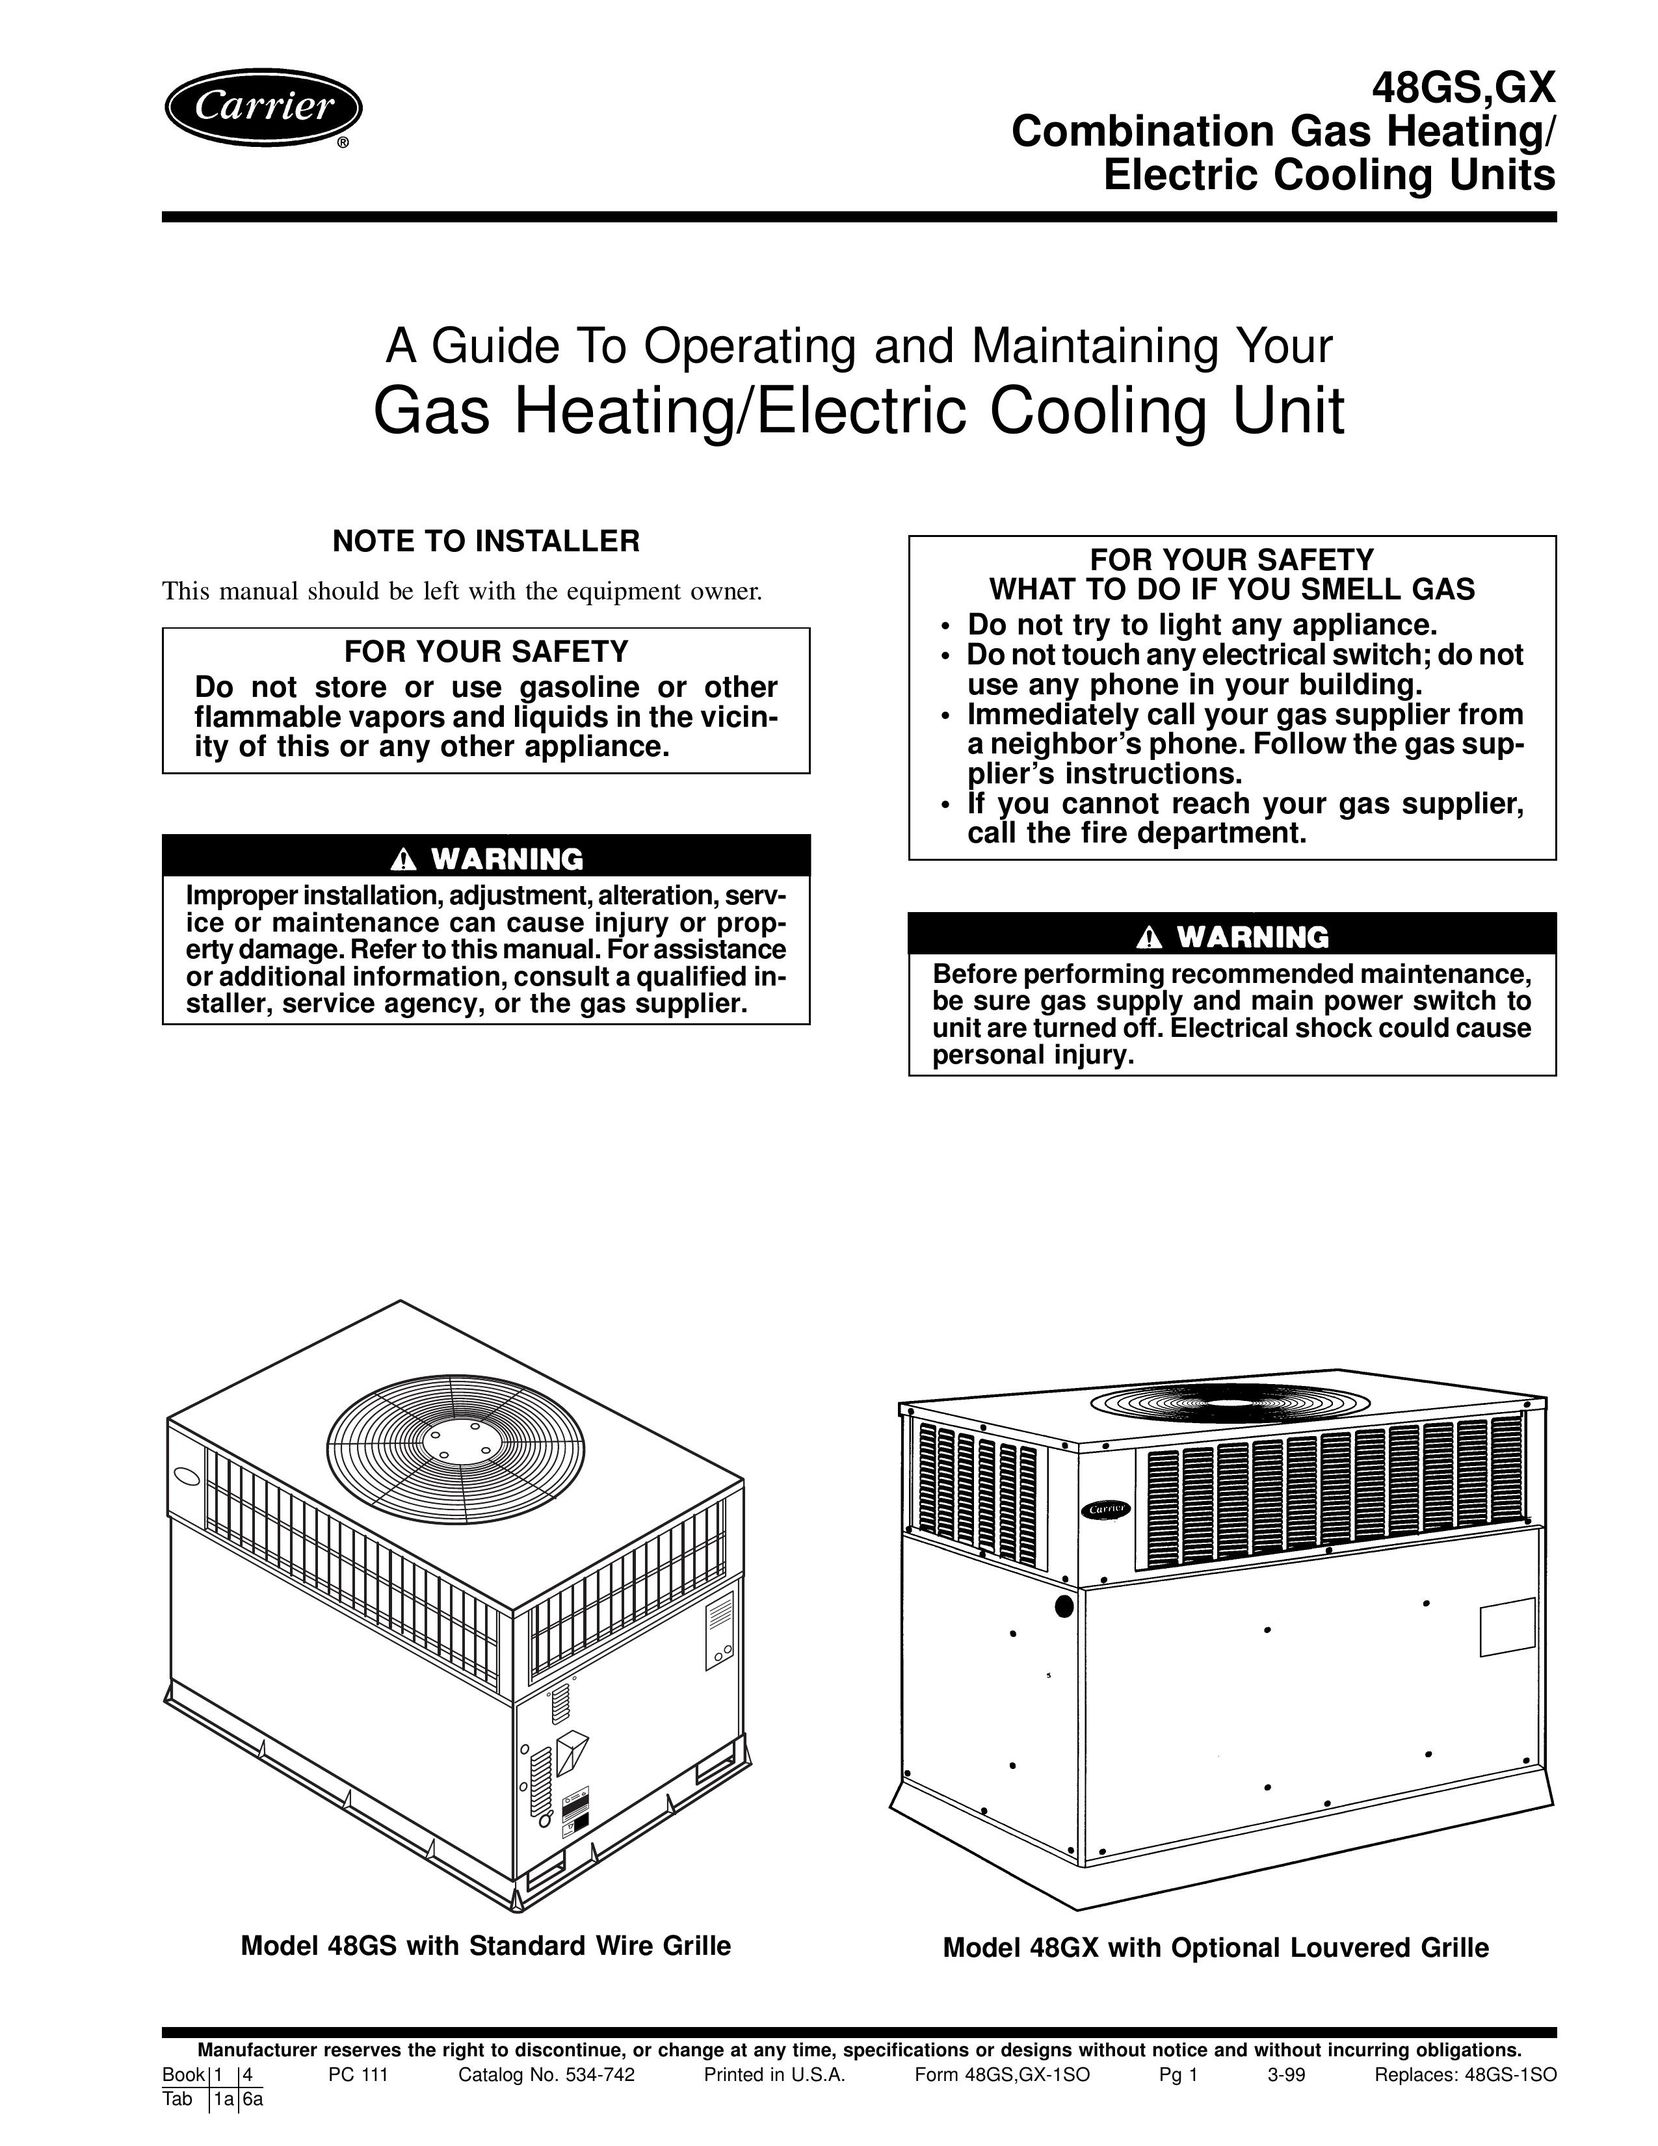 Carrier 48GS Gas Heater User Manual